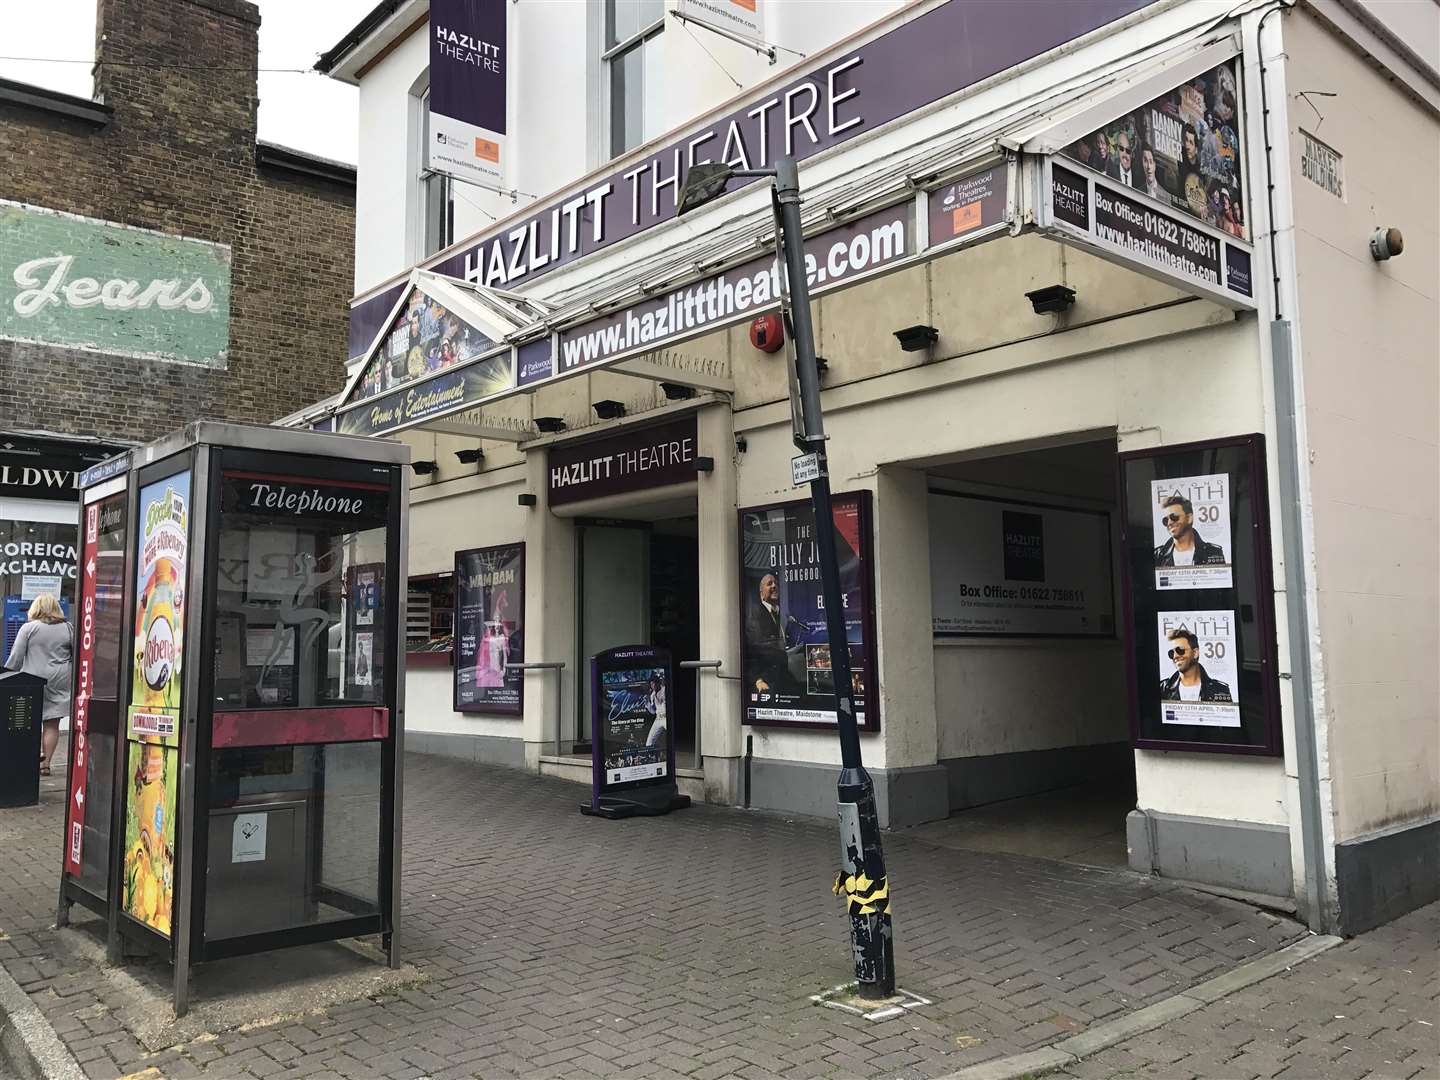 The Hazlitt Theatre in Maidstone